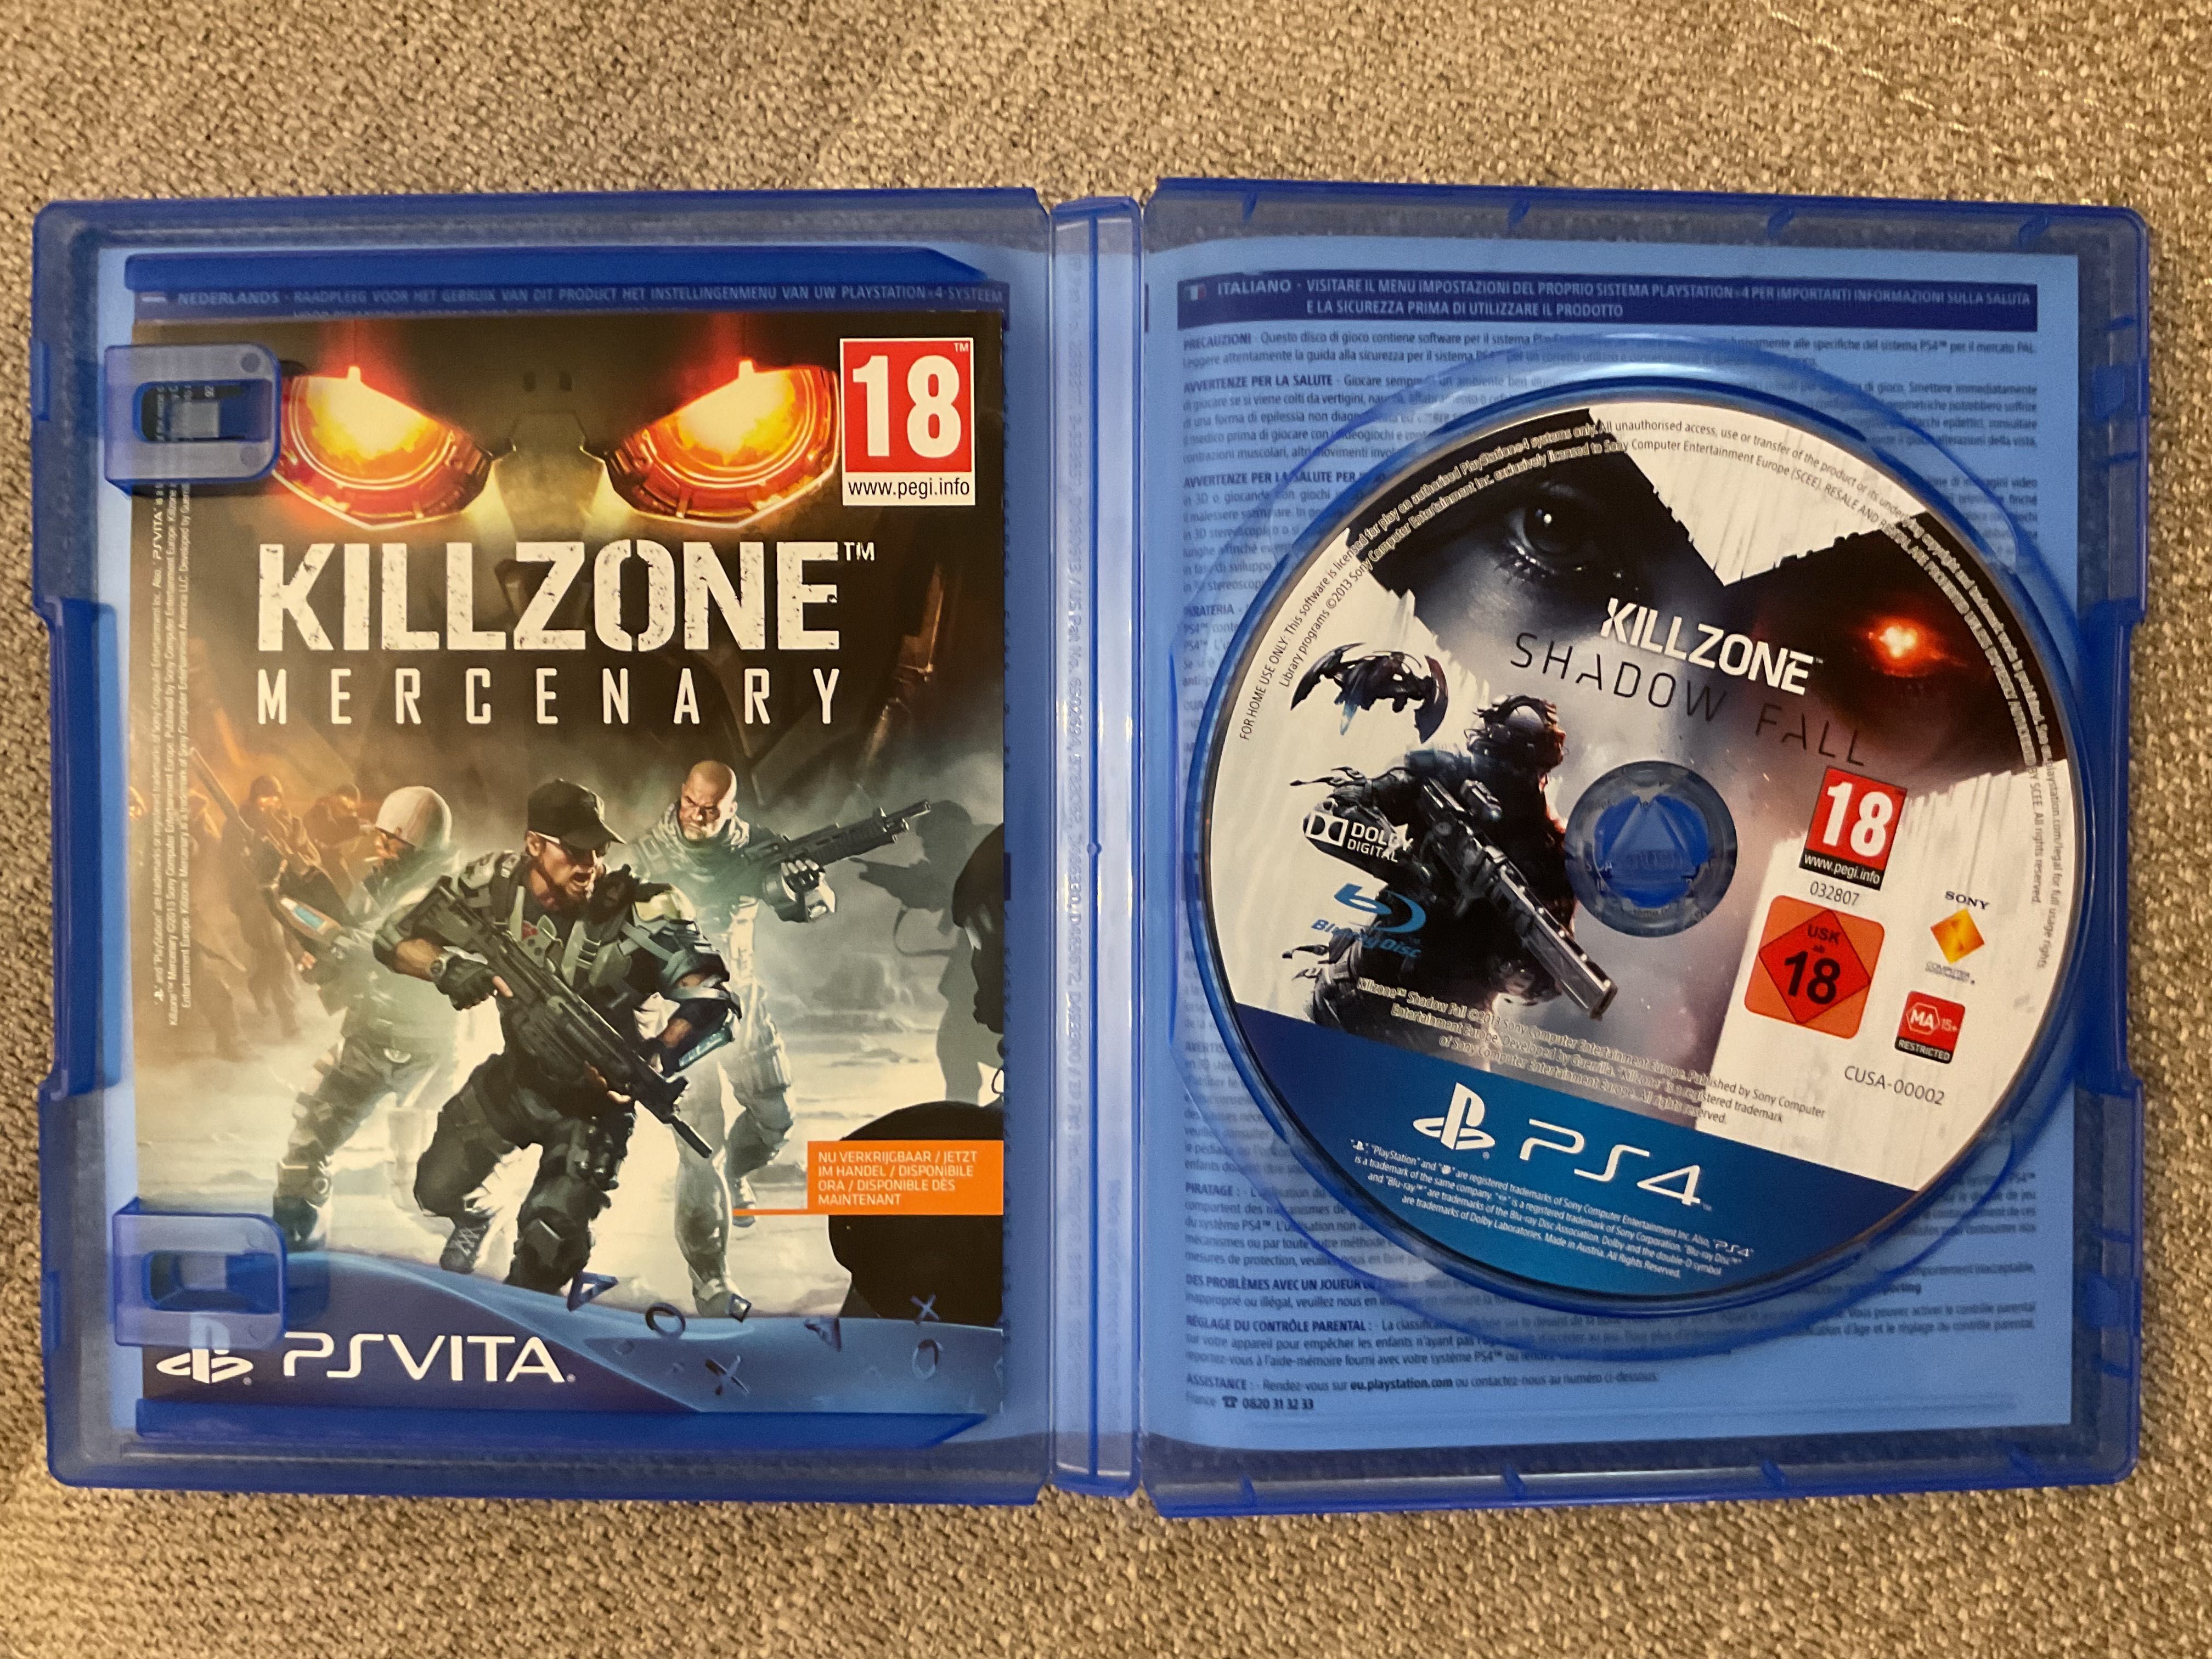 Killzone for PS4